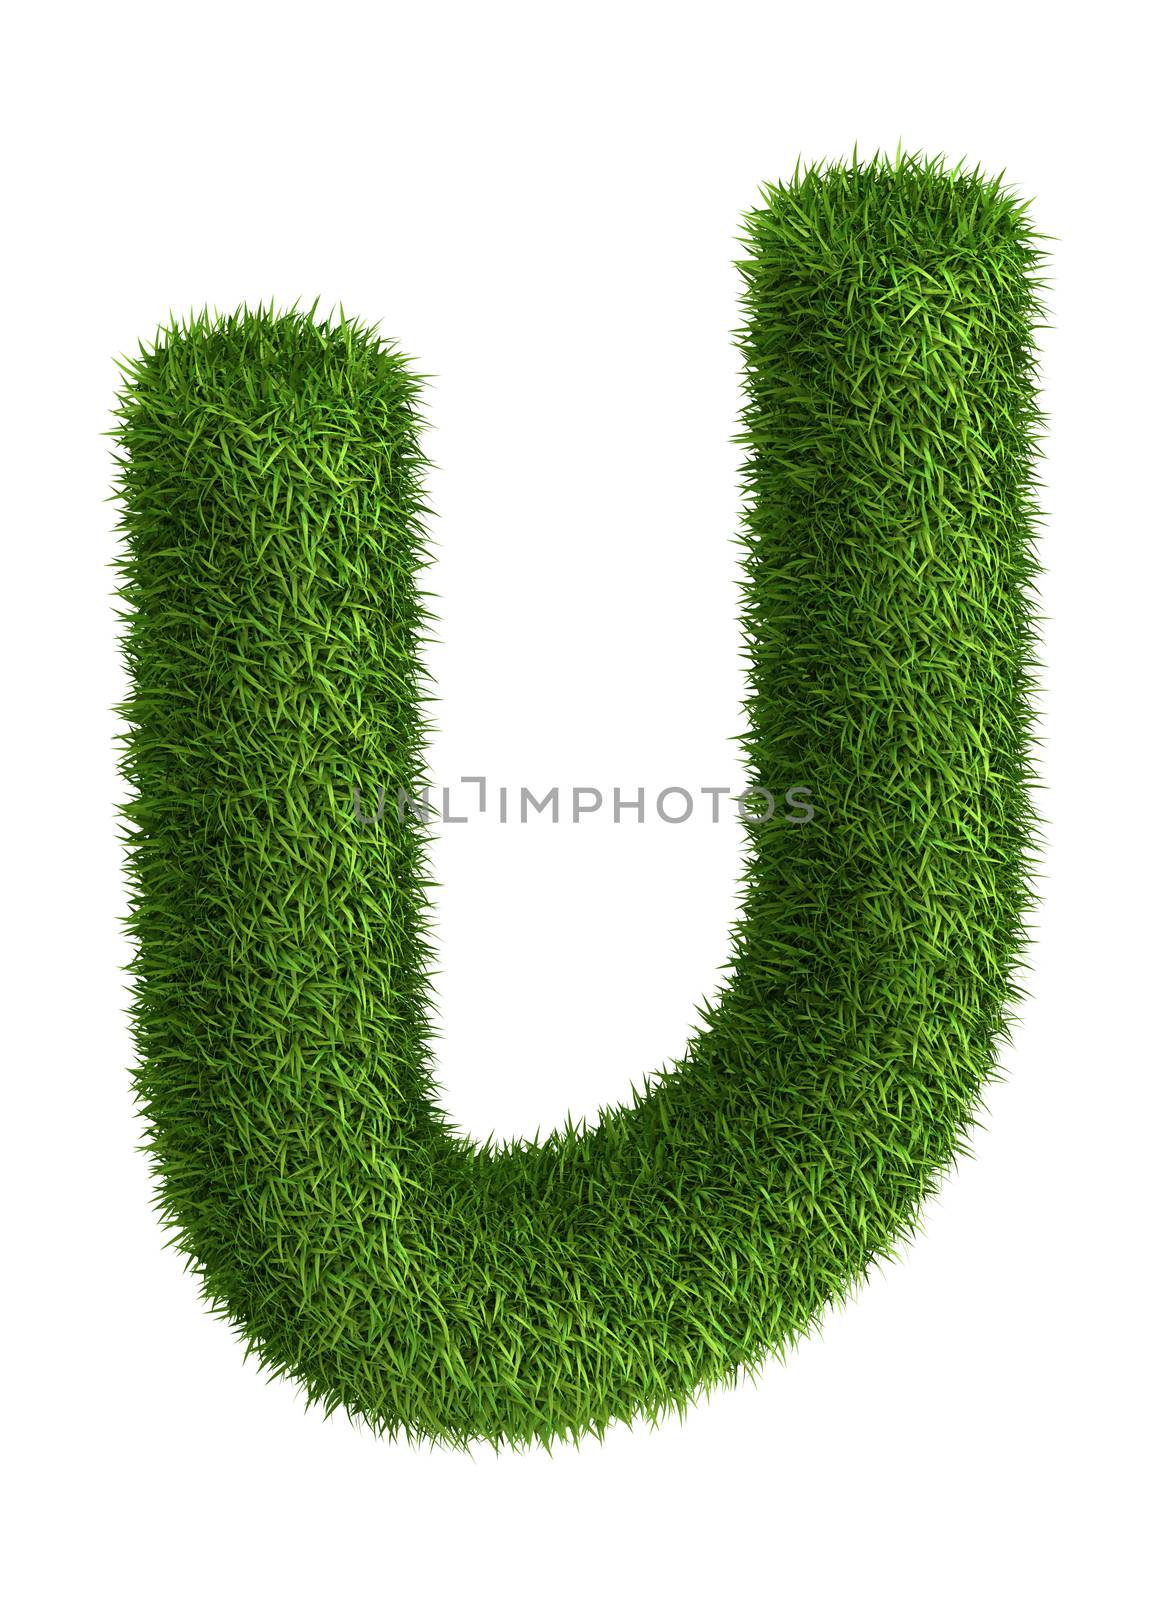 Natural grass letter U by iunewind